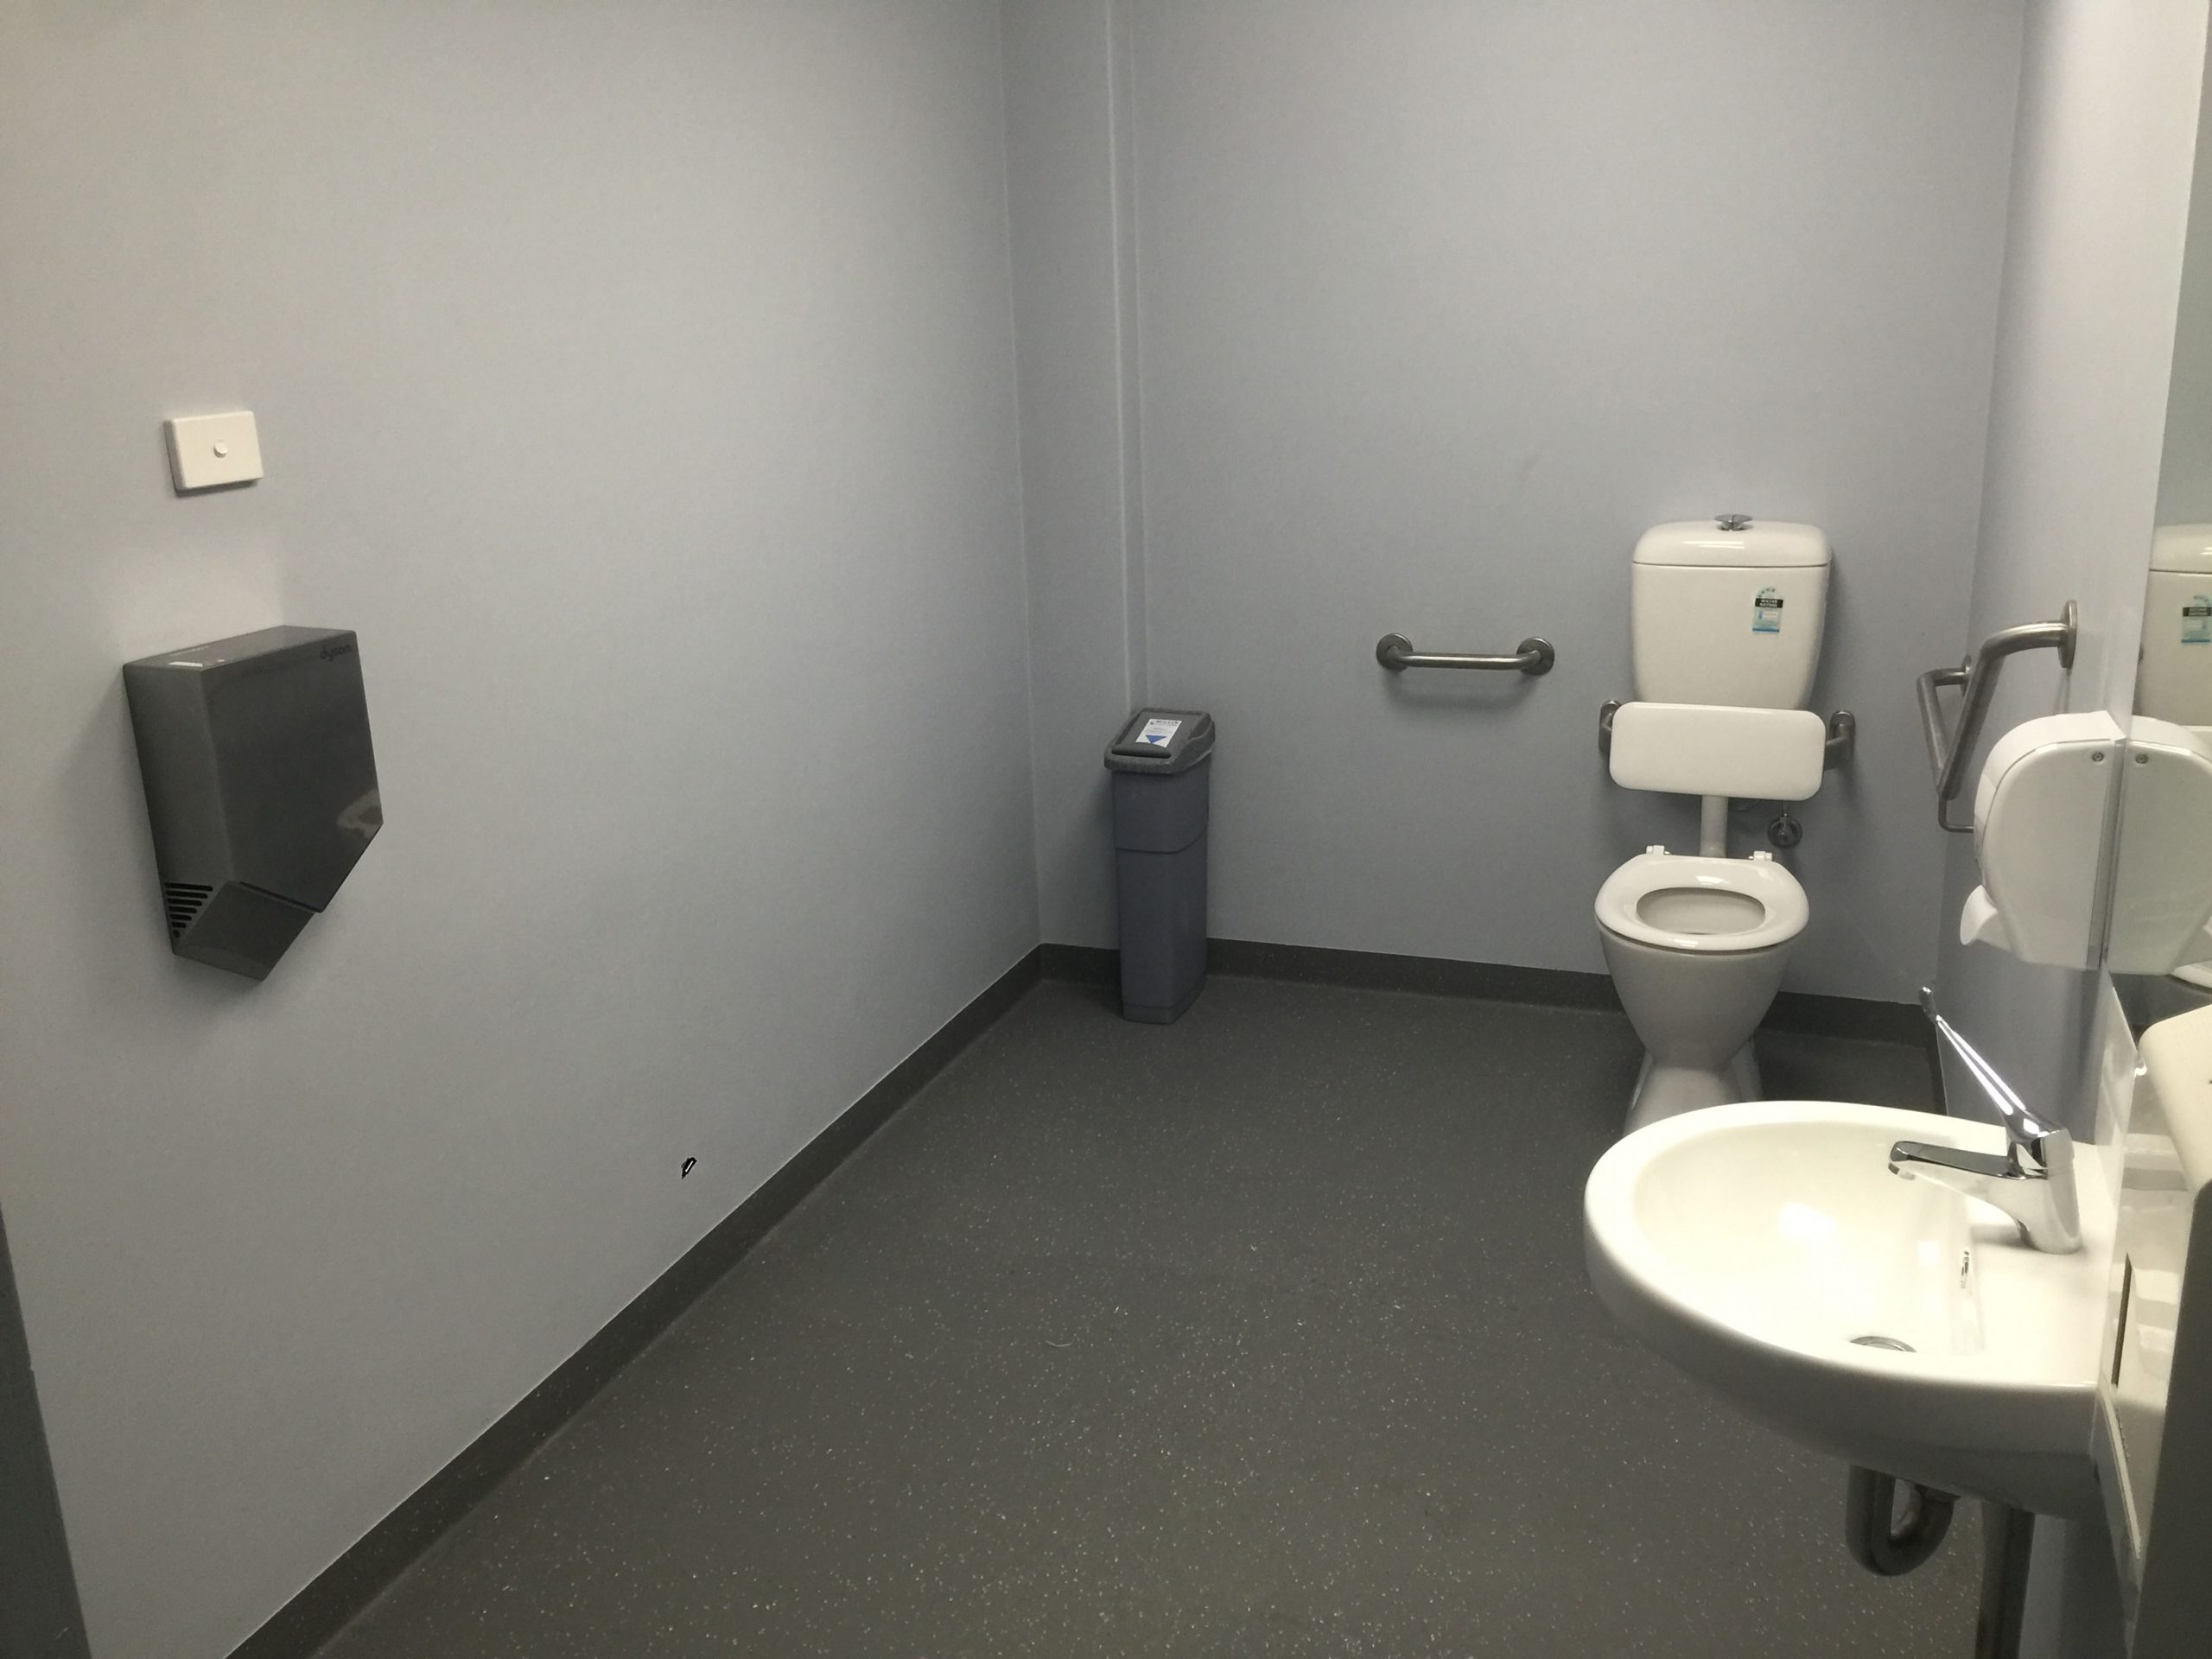 Commercial & Industrial toilet plumbing by Northway Plumbing in Adelaide